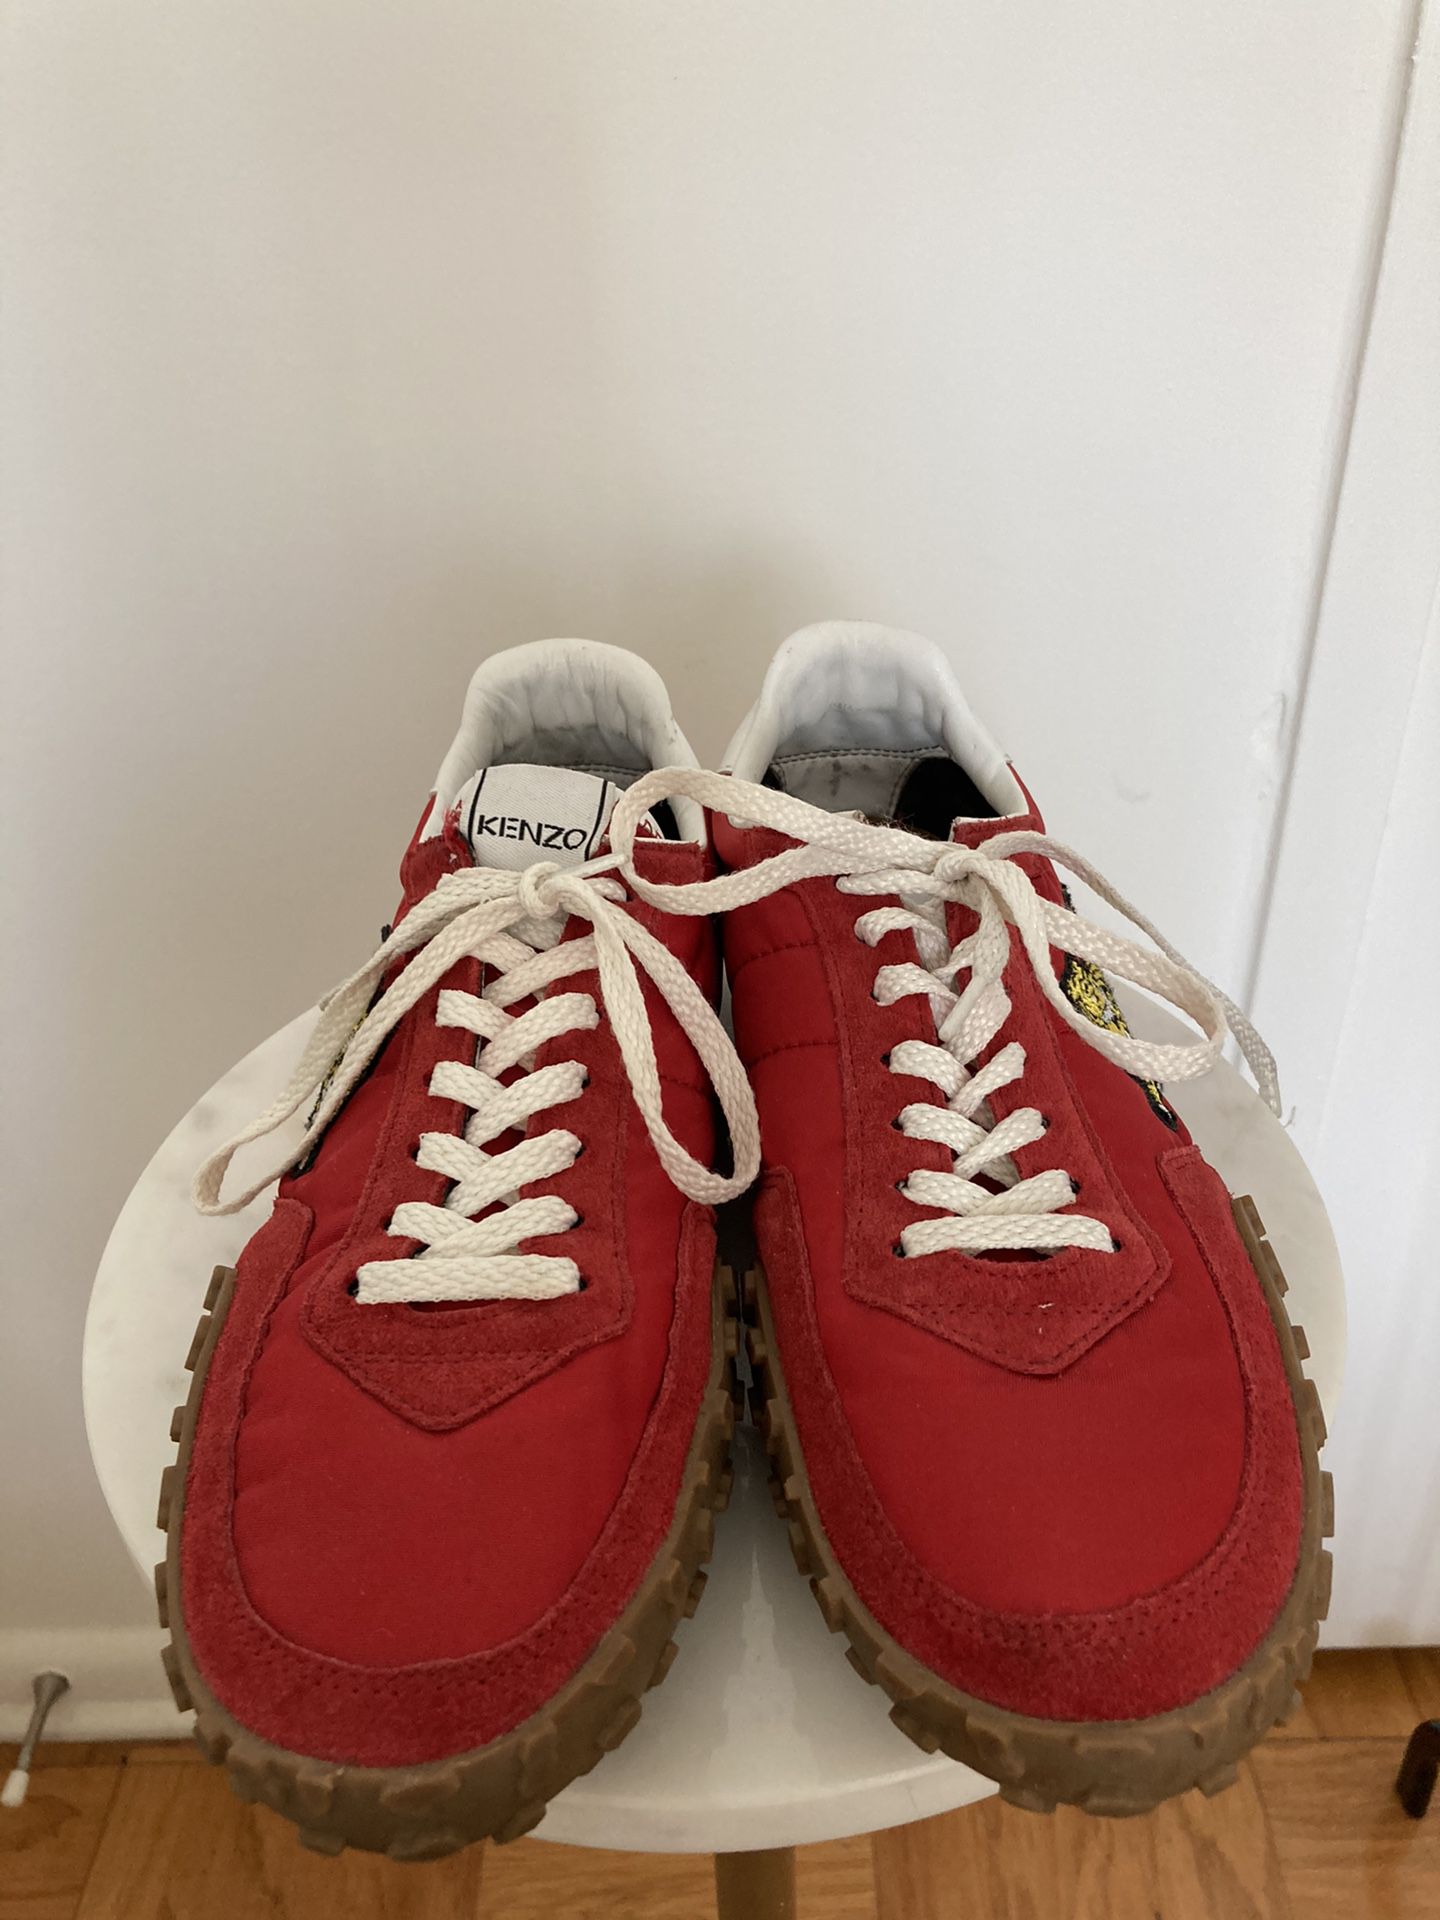 Kenzo Sneakers - 9.5/40